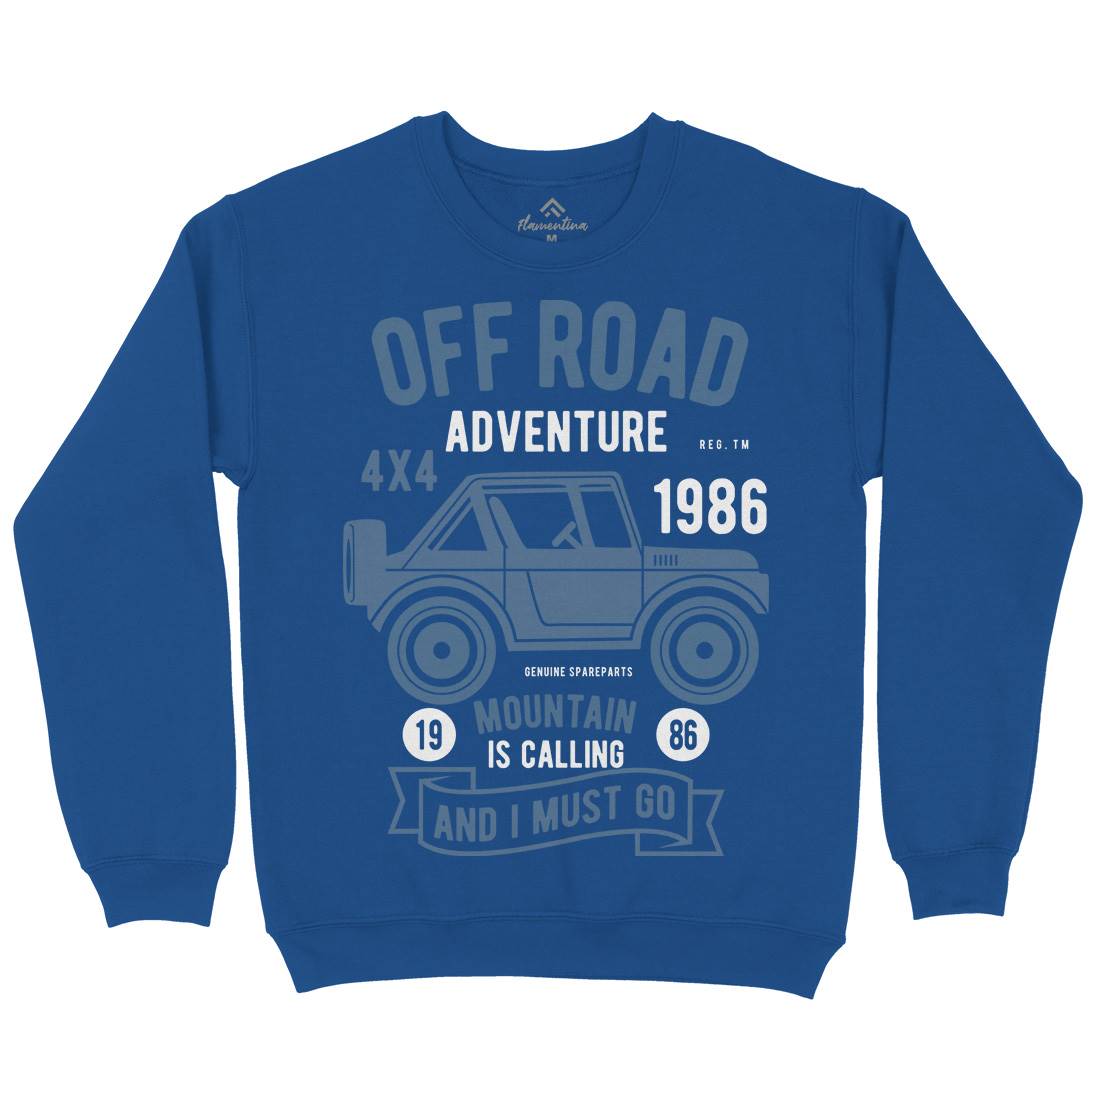 Off Road Adventure Kids Crew Neck Sweatshirt Cars B432